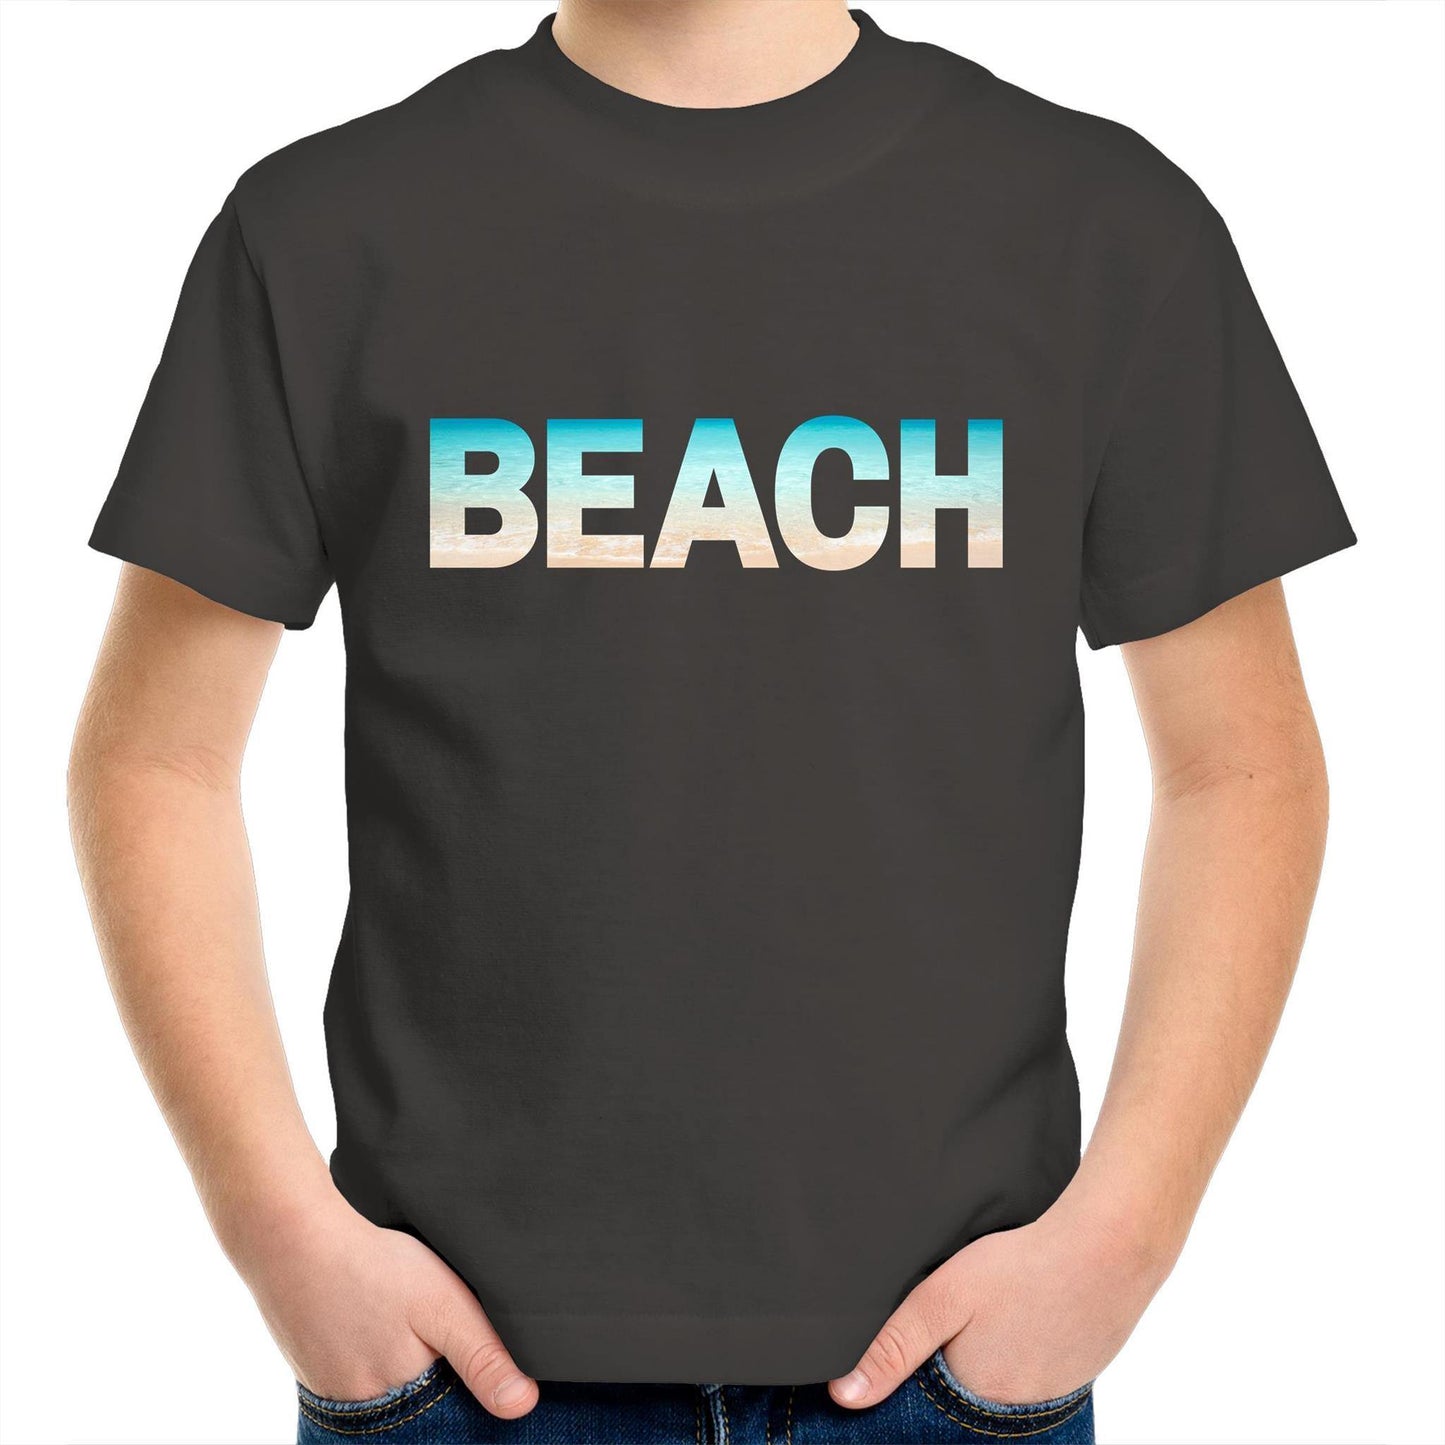 Beach - Kids Youth Crew T-Shirt Charcoal Kids Youth T-shirt Summer